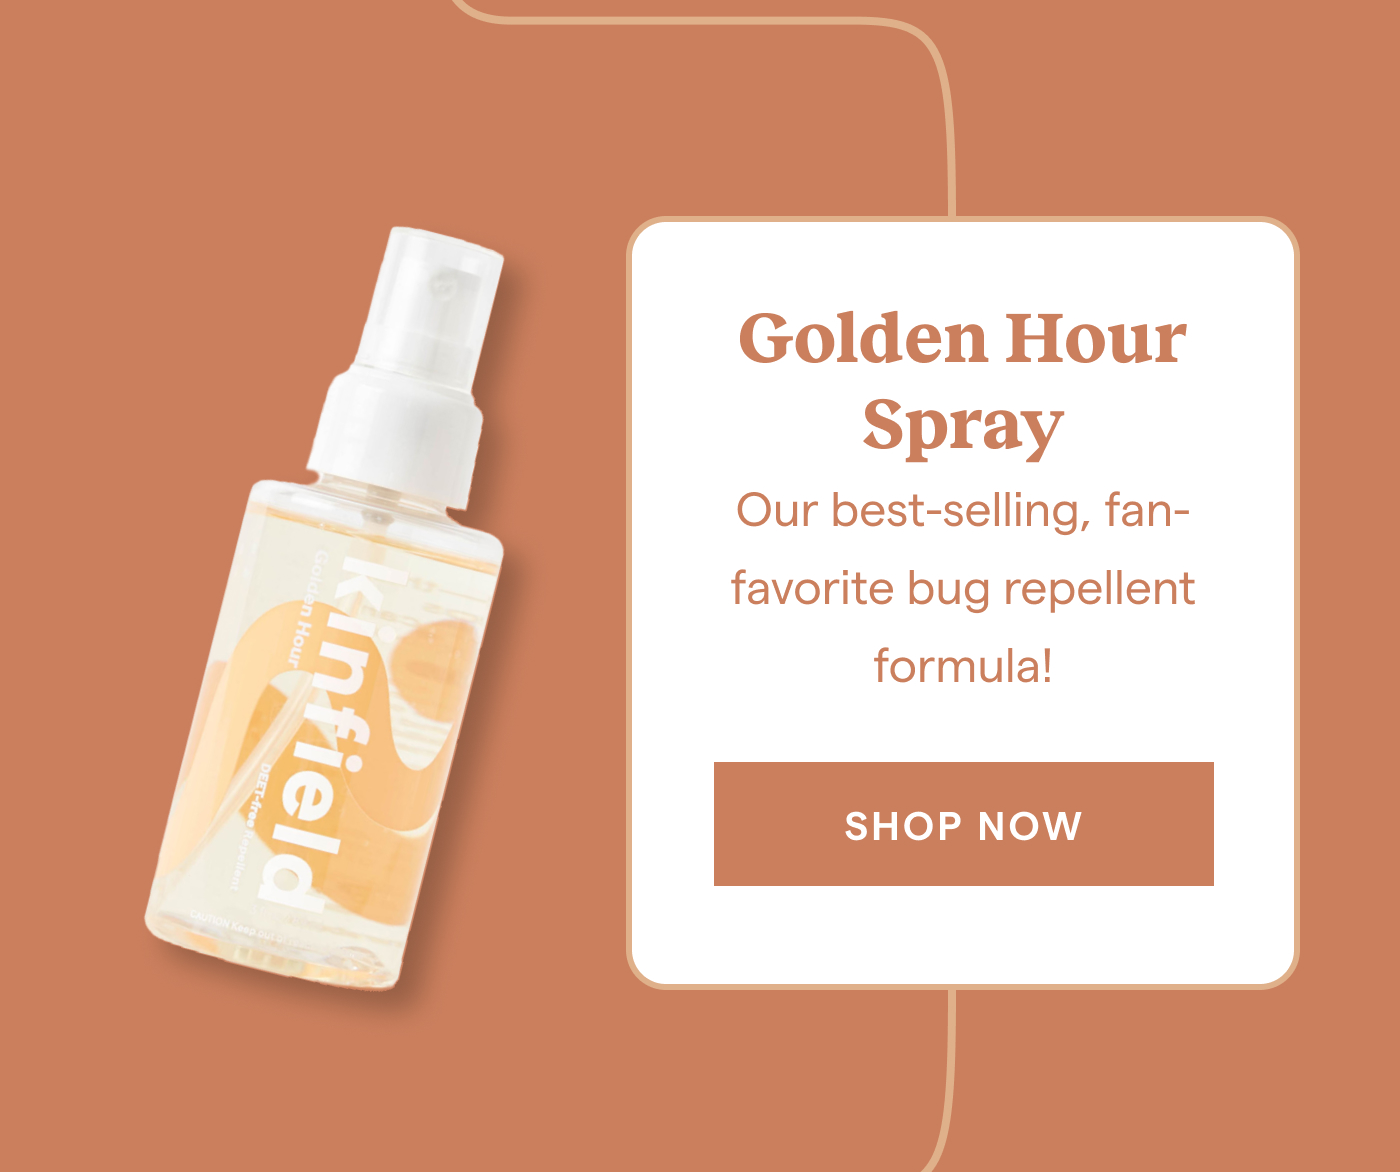 Golden Hour Spray Our best-selling, fan-favorite bug repellent formula! Shop Now.